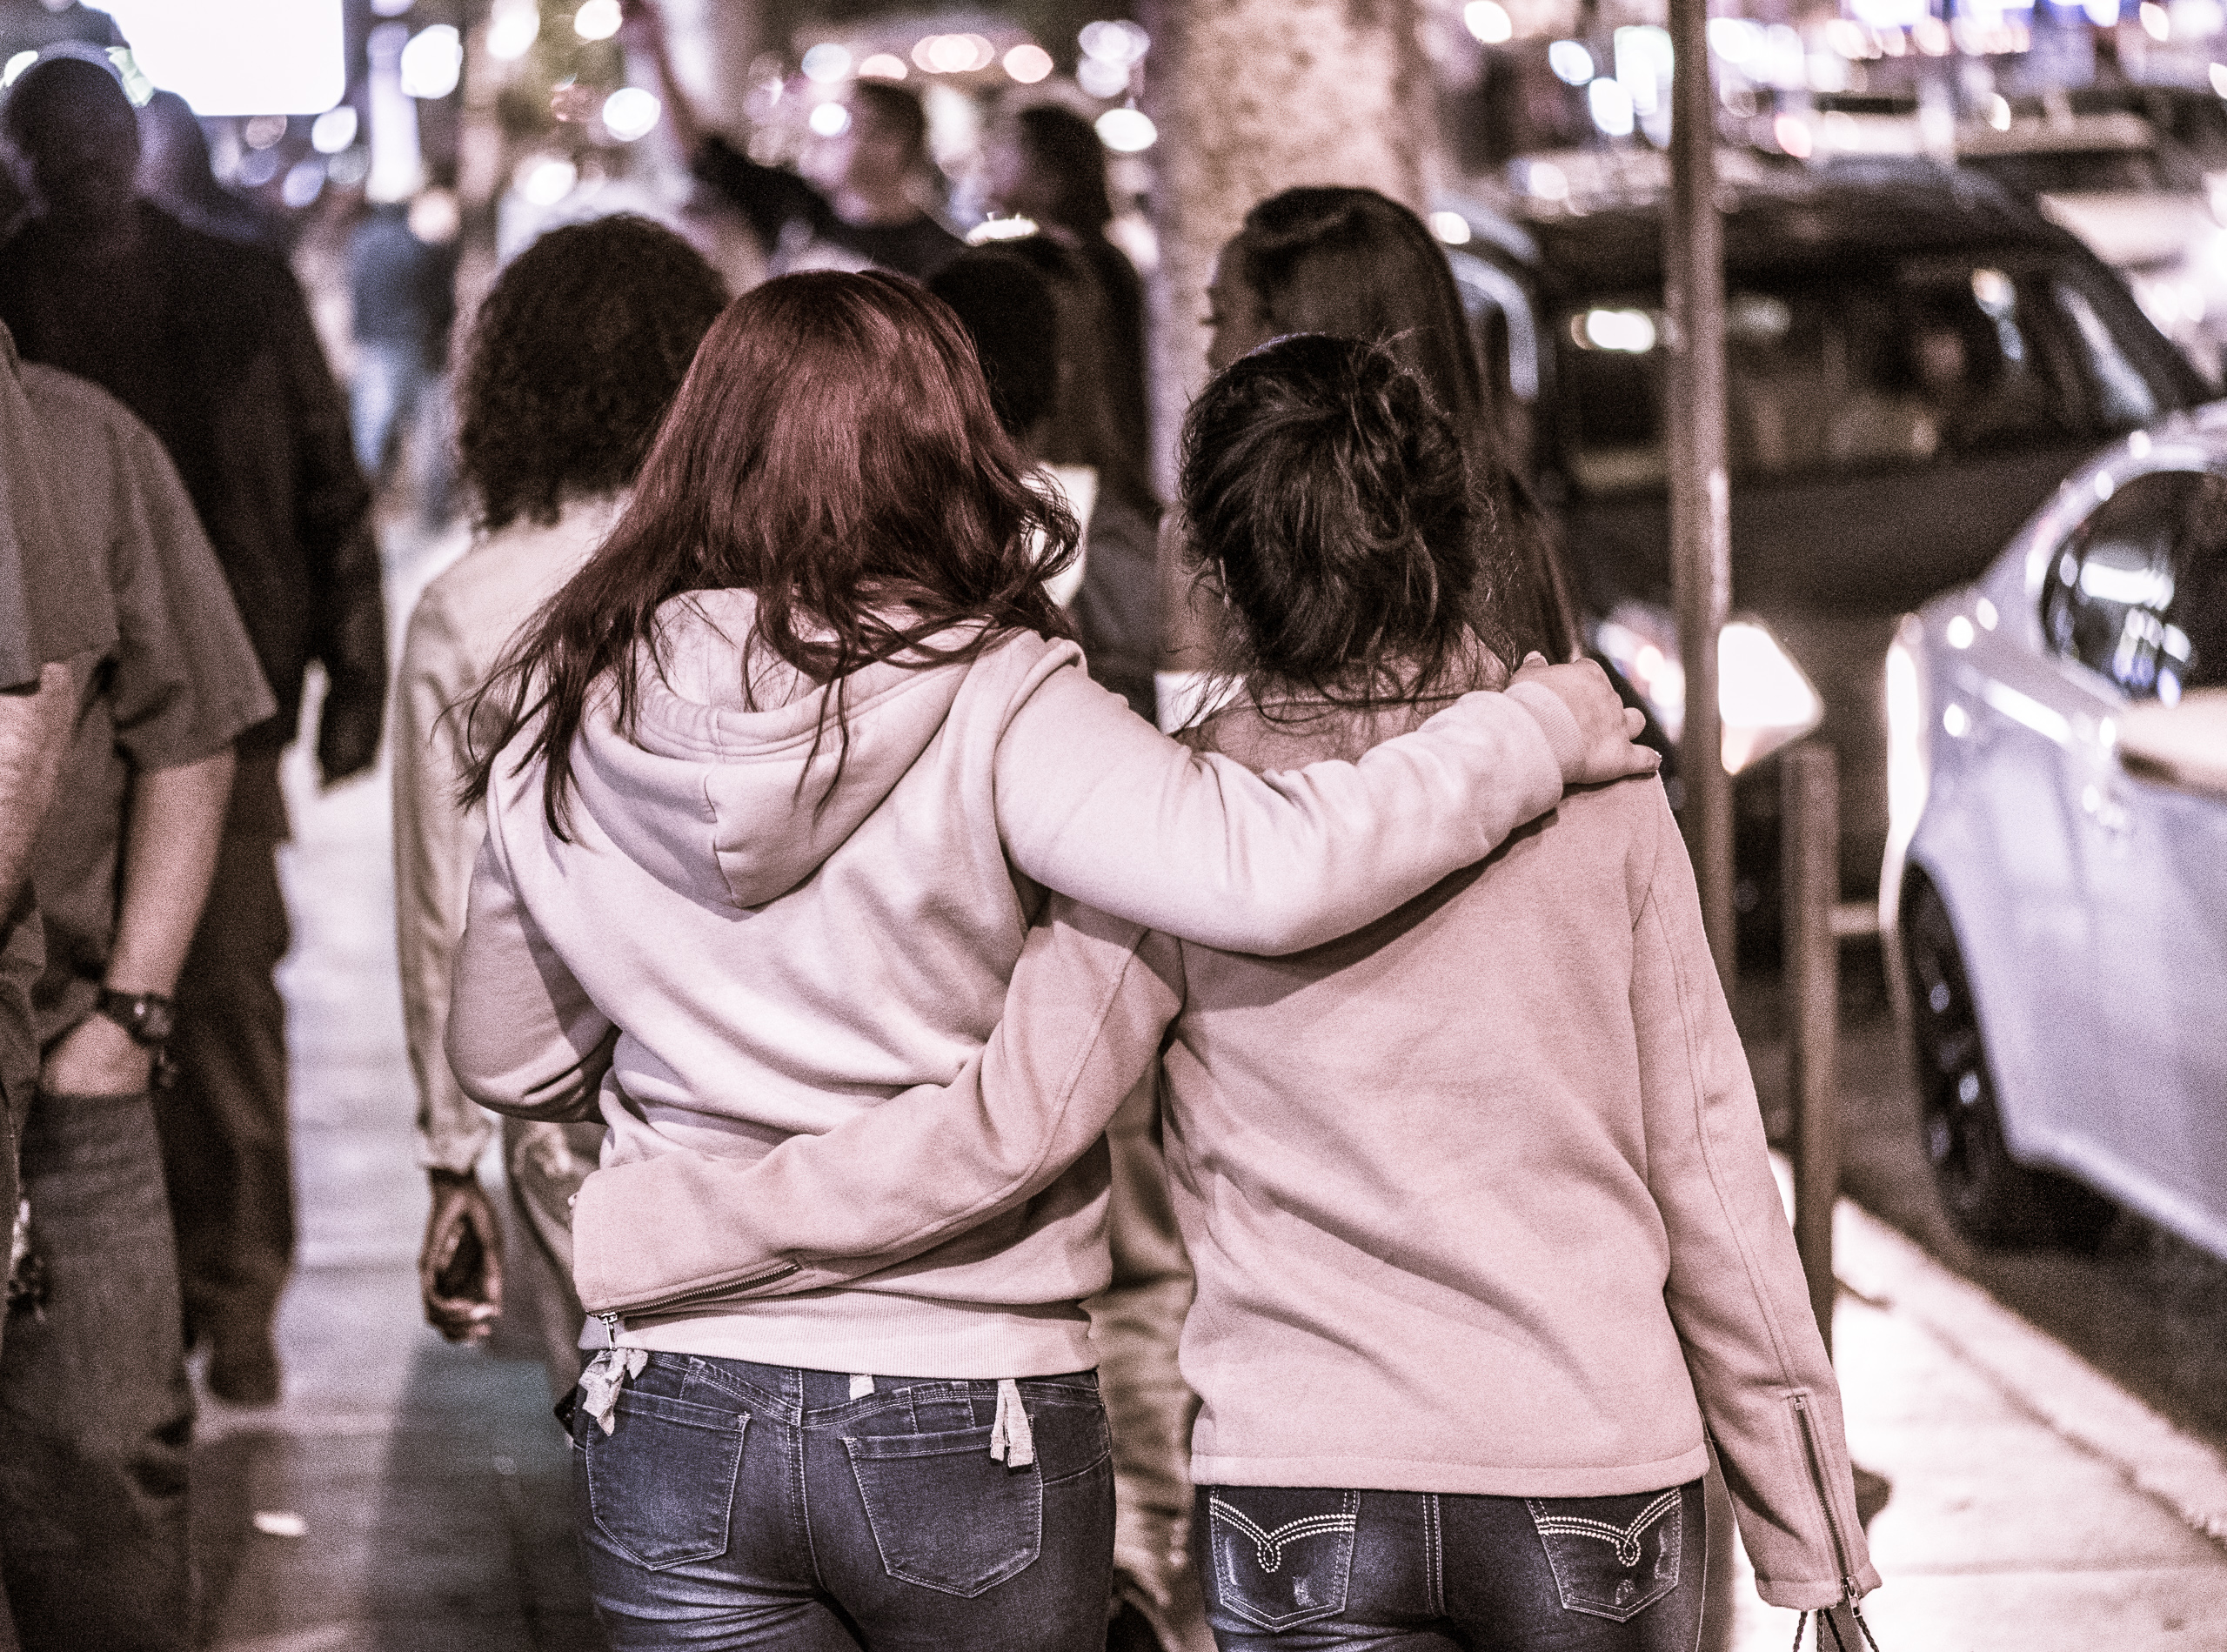 two women walk down the street arm-in-arm